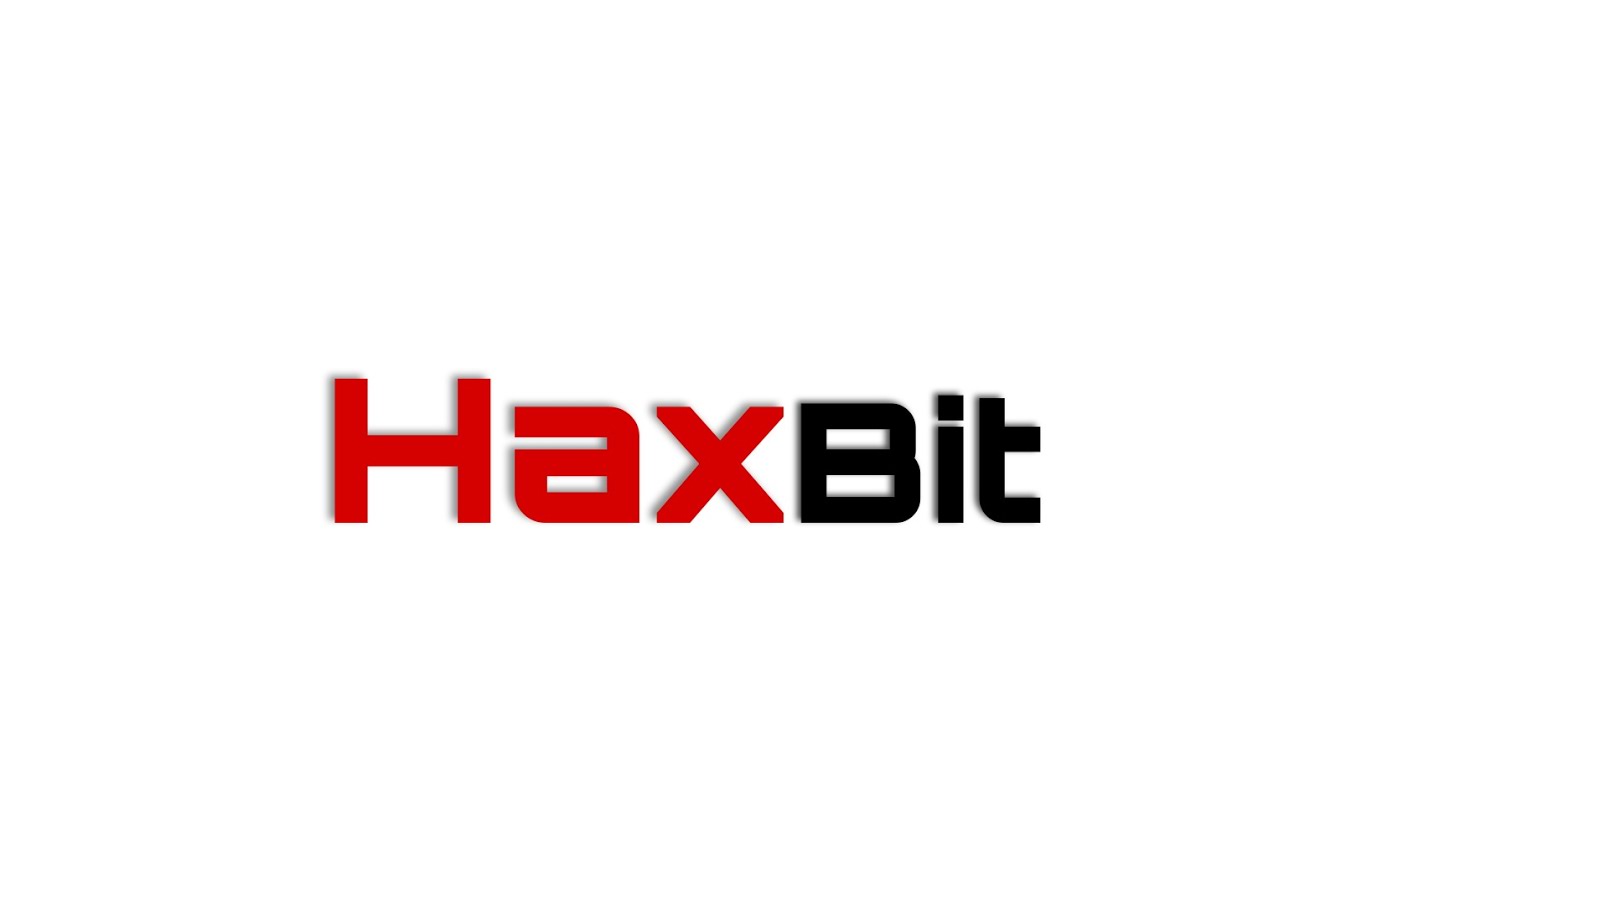 HaxBite